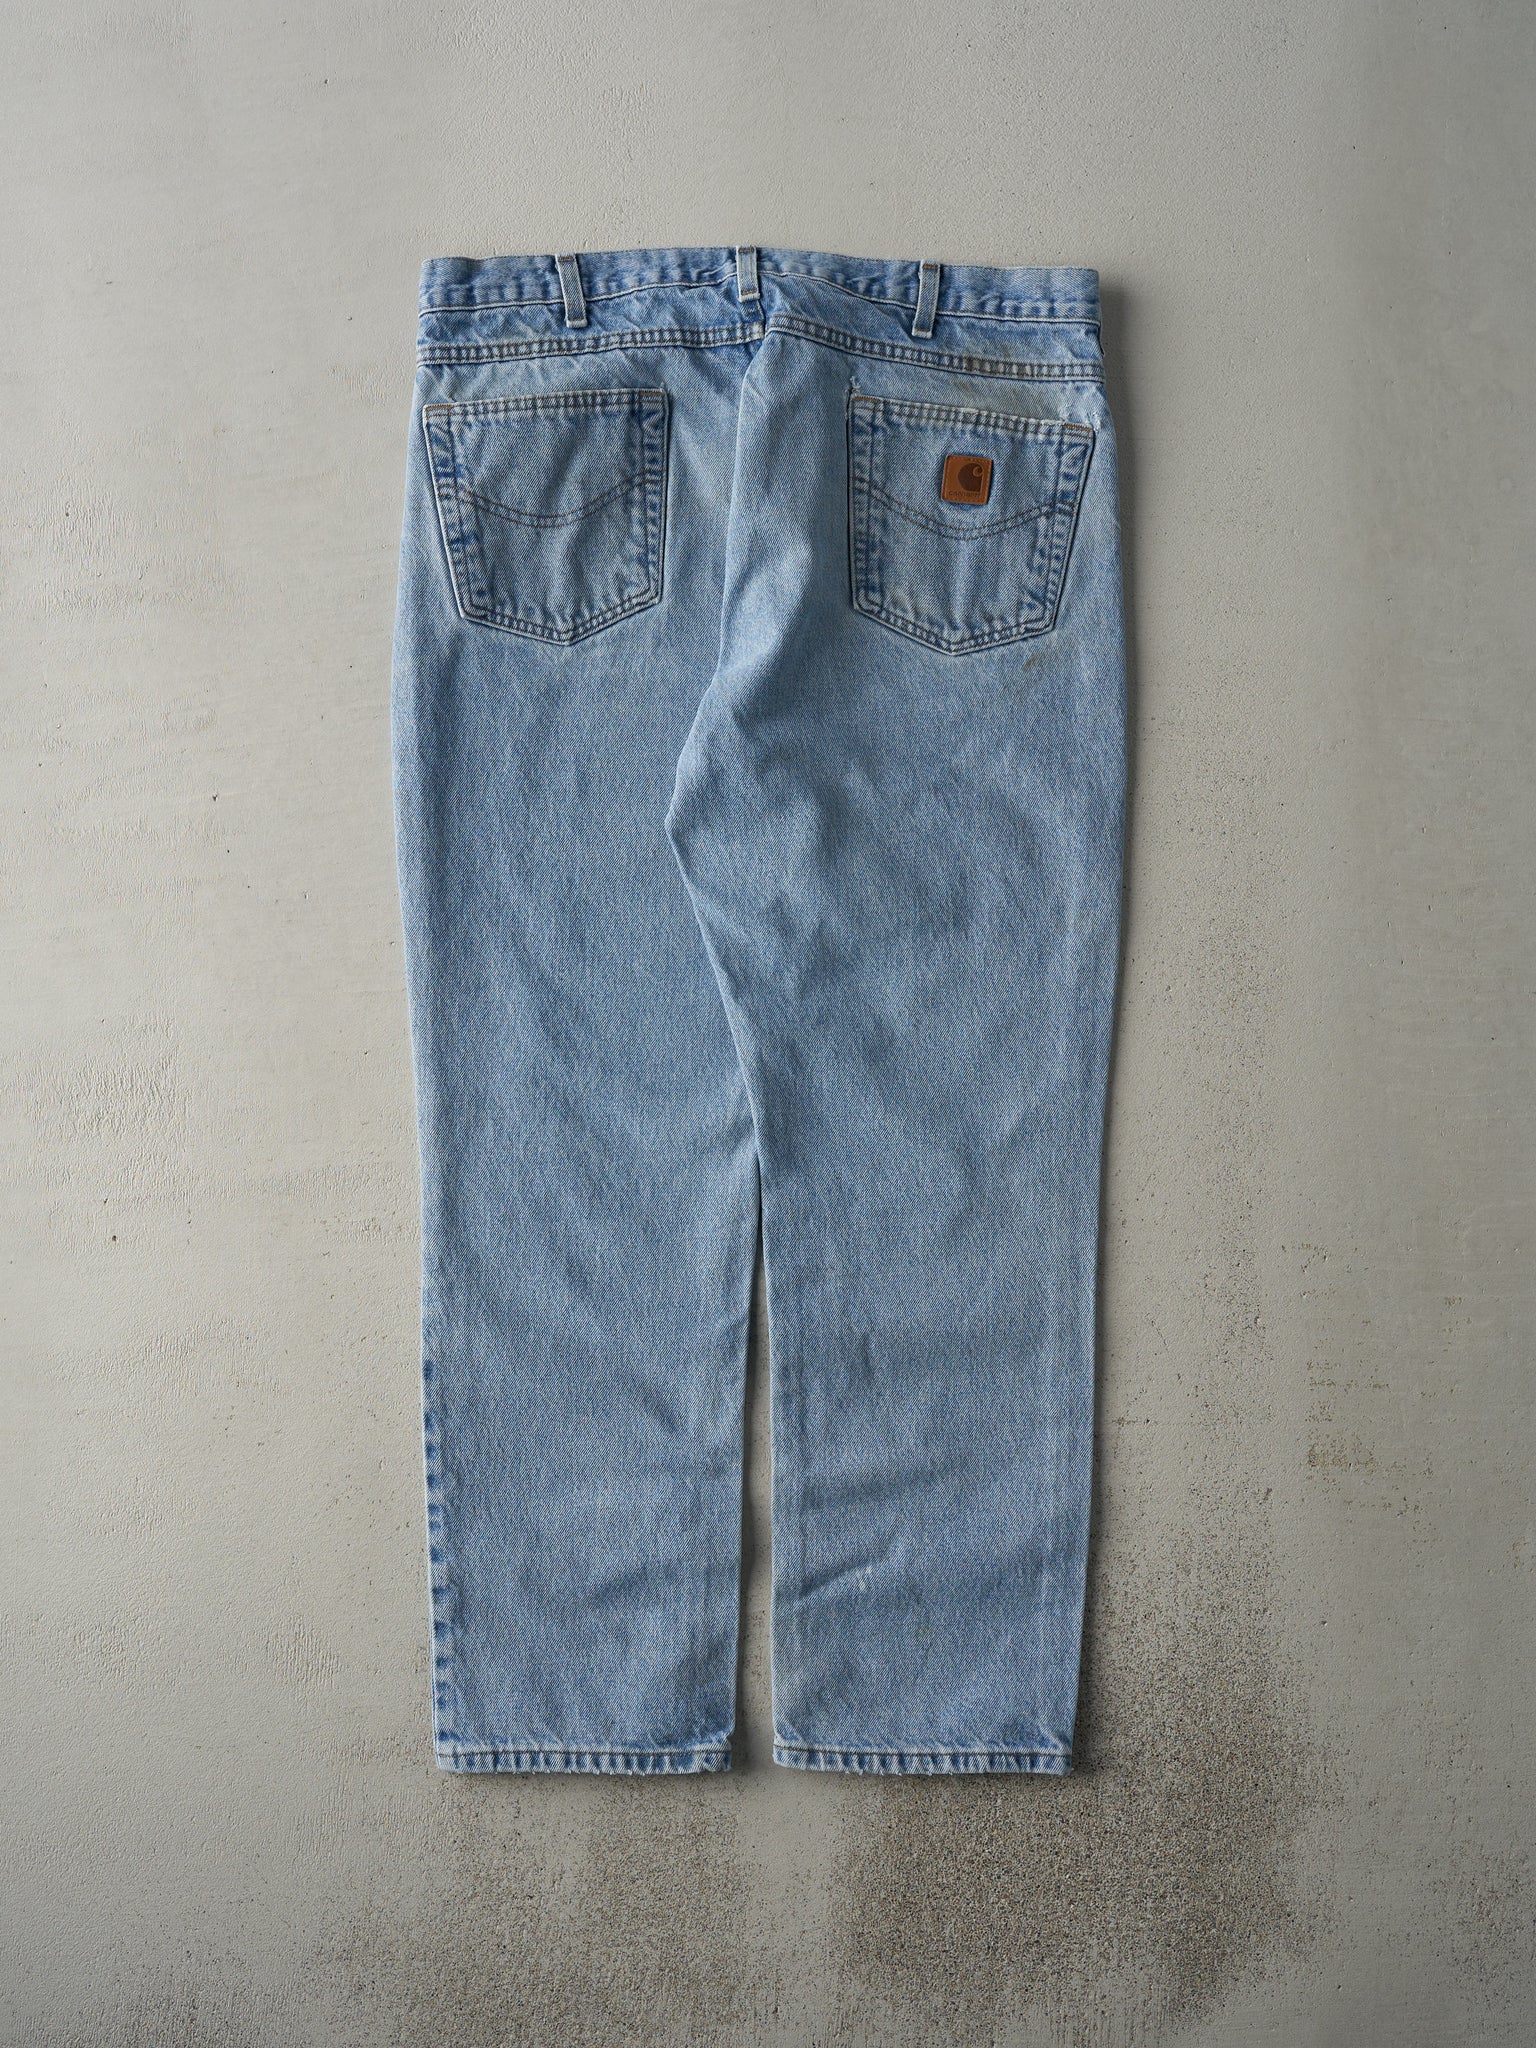 Vintage 90s Light Wash Carhartt Jeans (37x29)